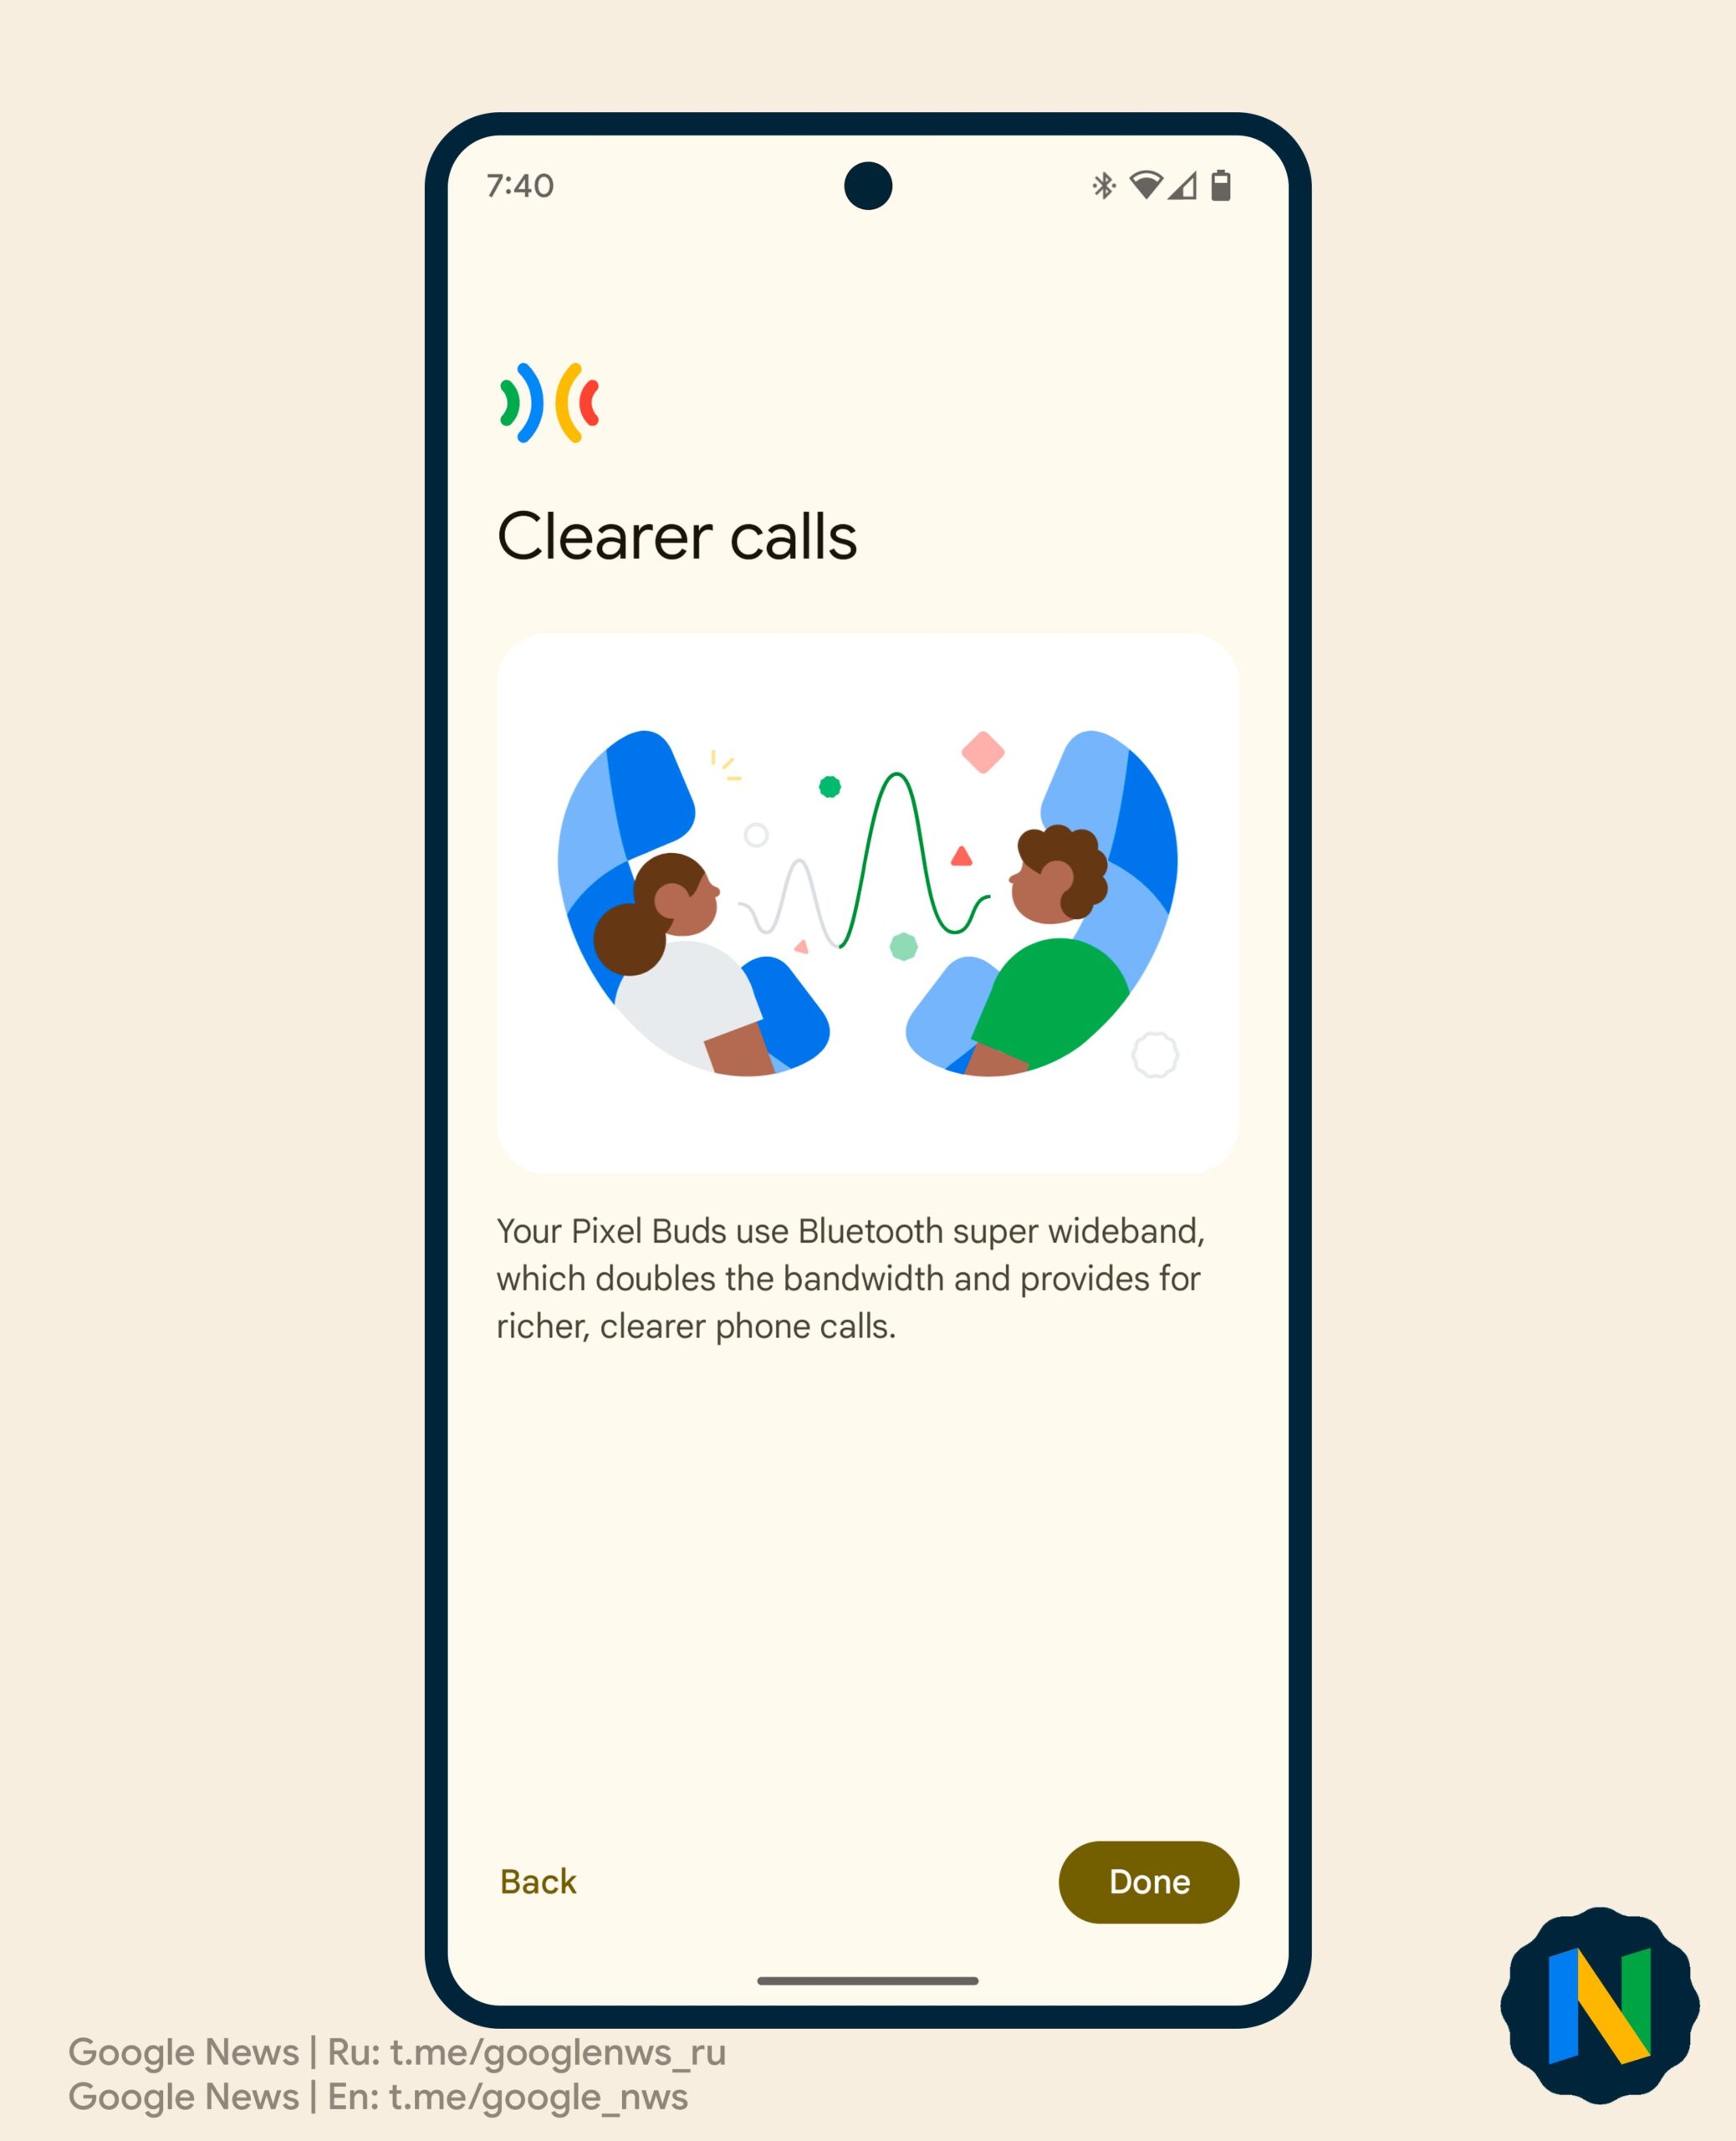 Google Pixel Buds Pro - Google News - Clearer Calls